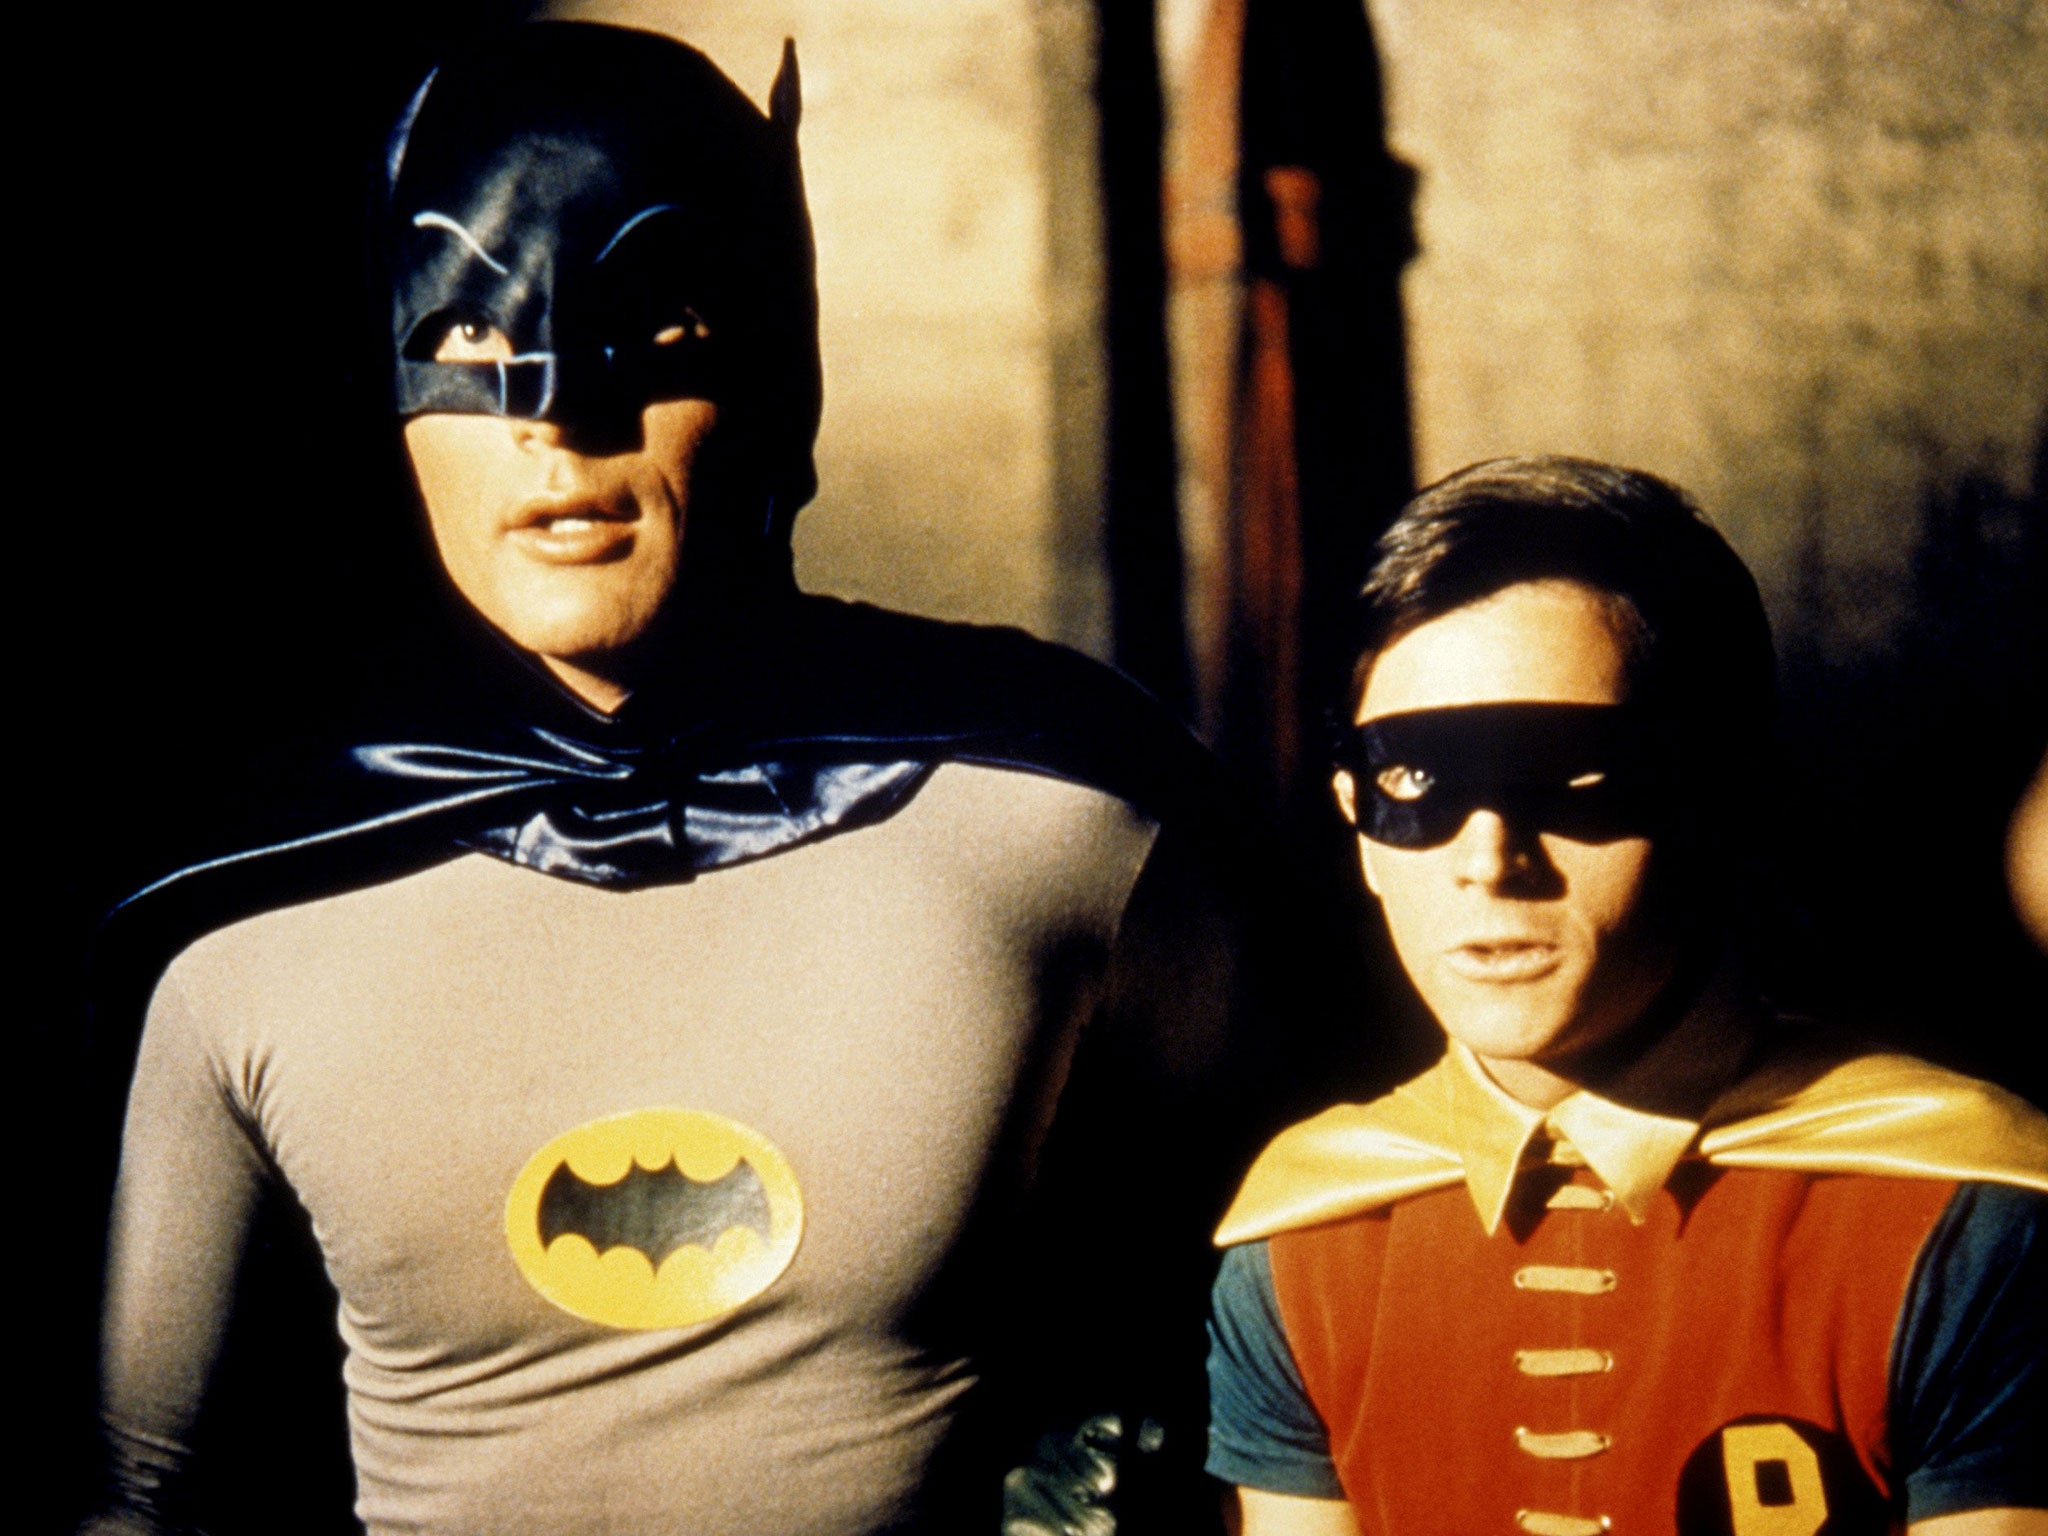 Adam West as Batman and Burt Ward and Robin in the 1960s Batman TV show